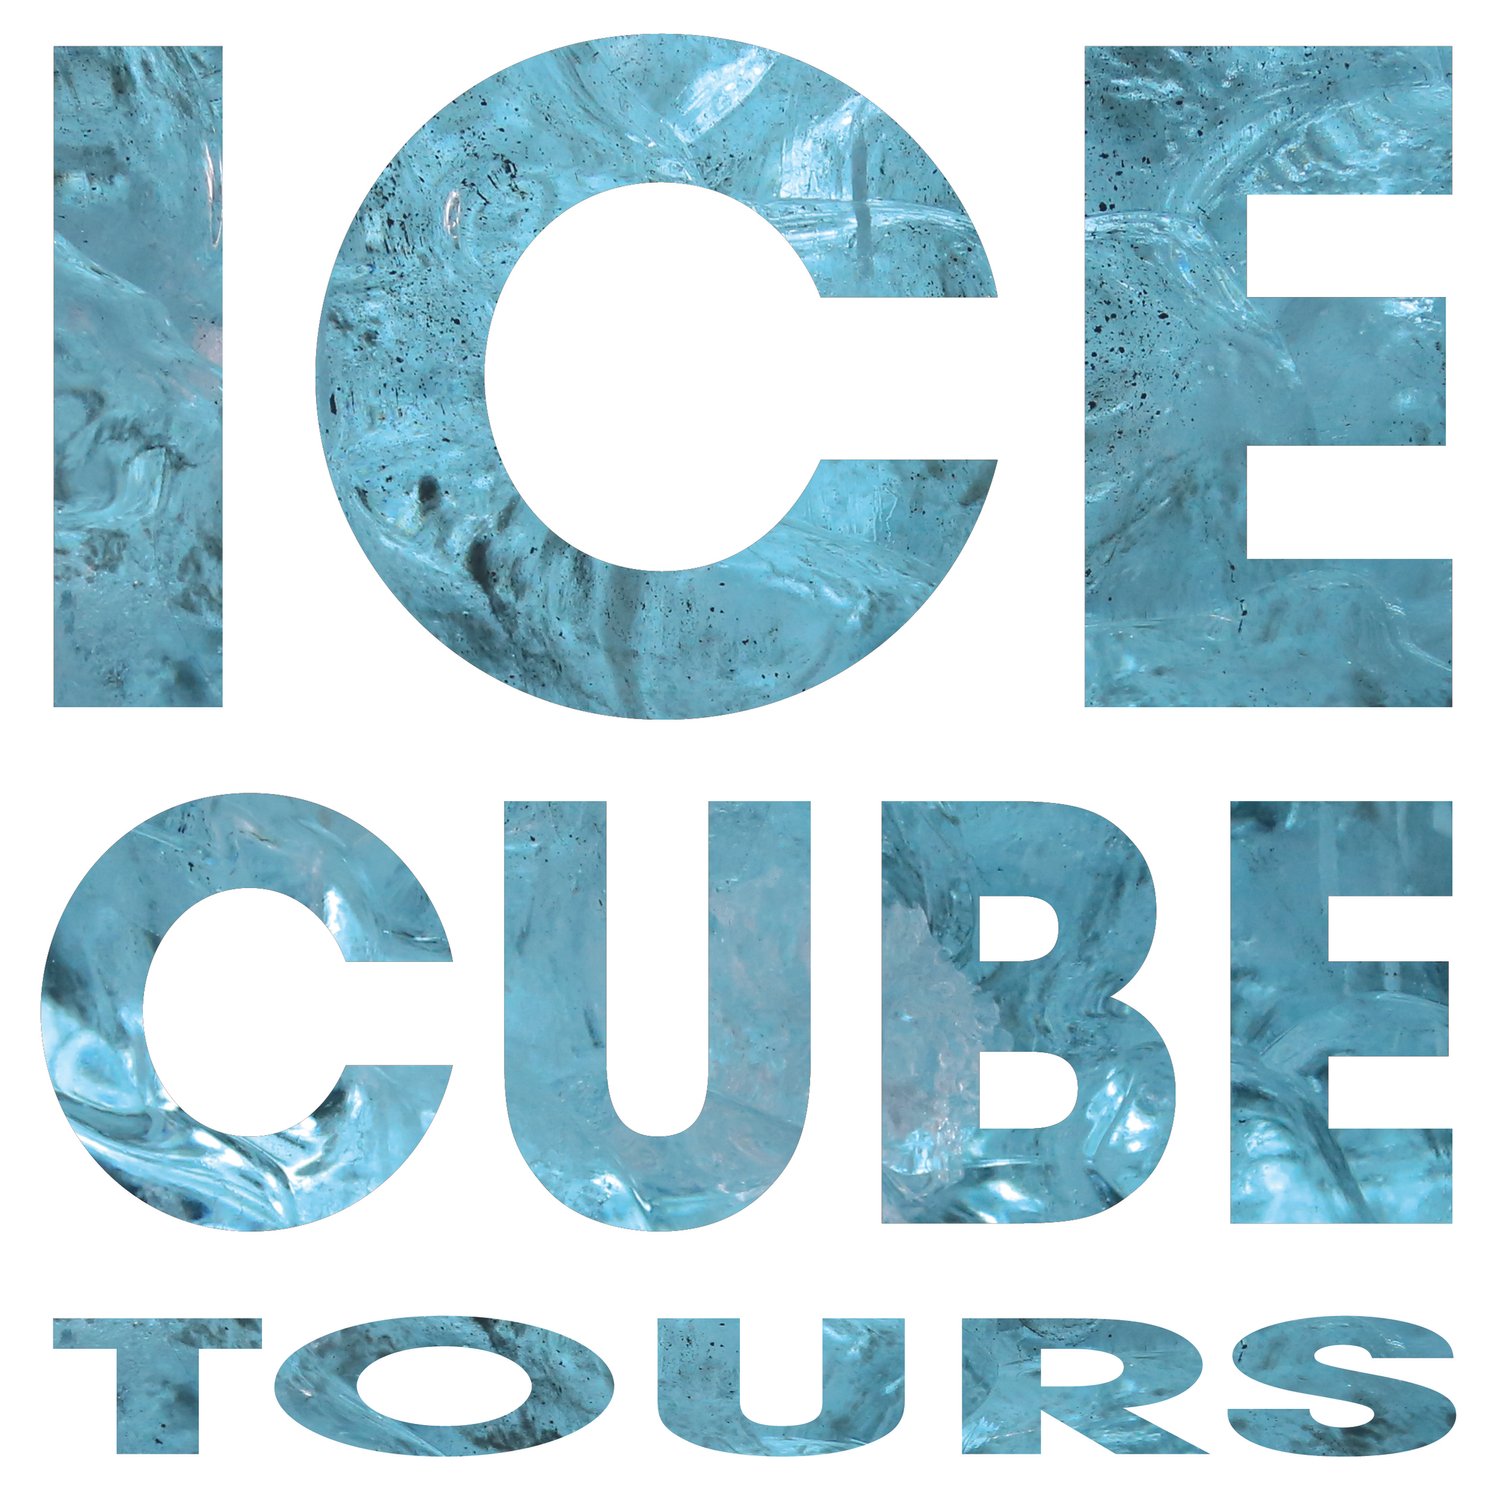 IcecubeTours